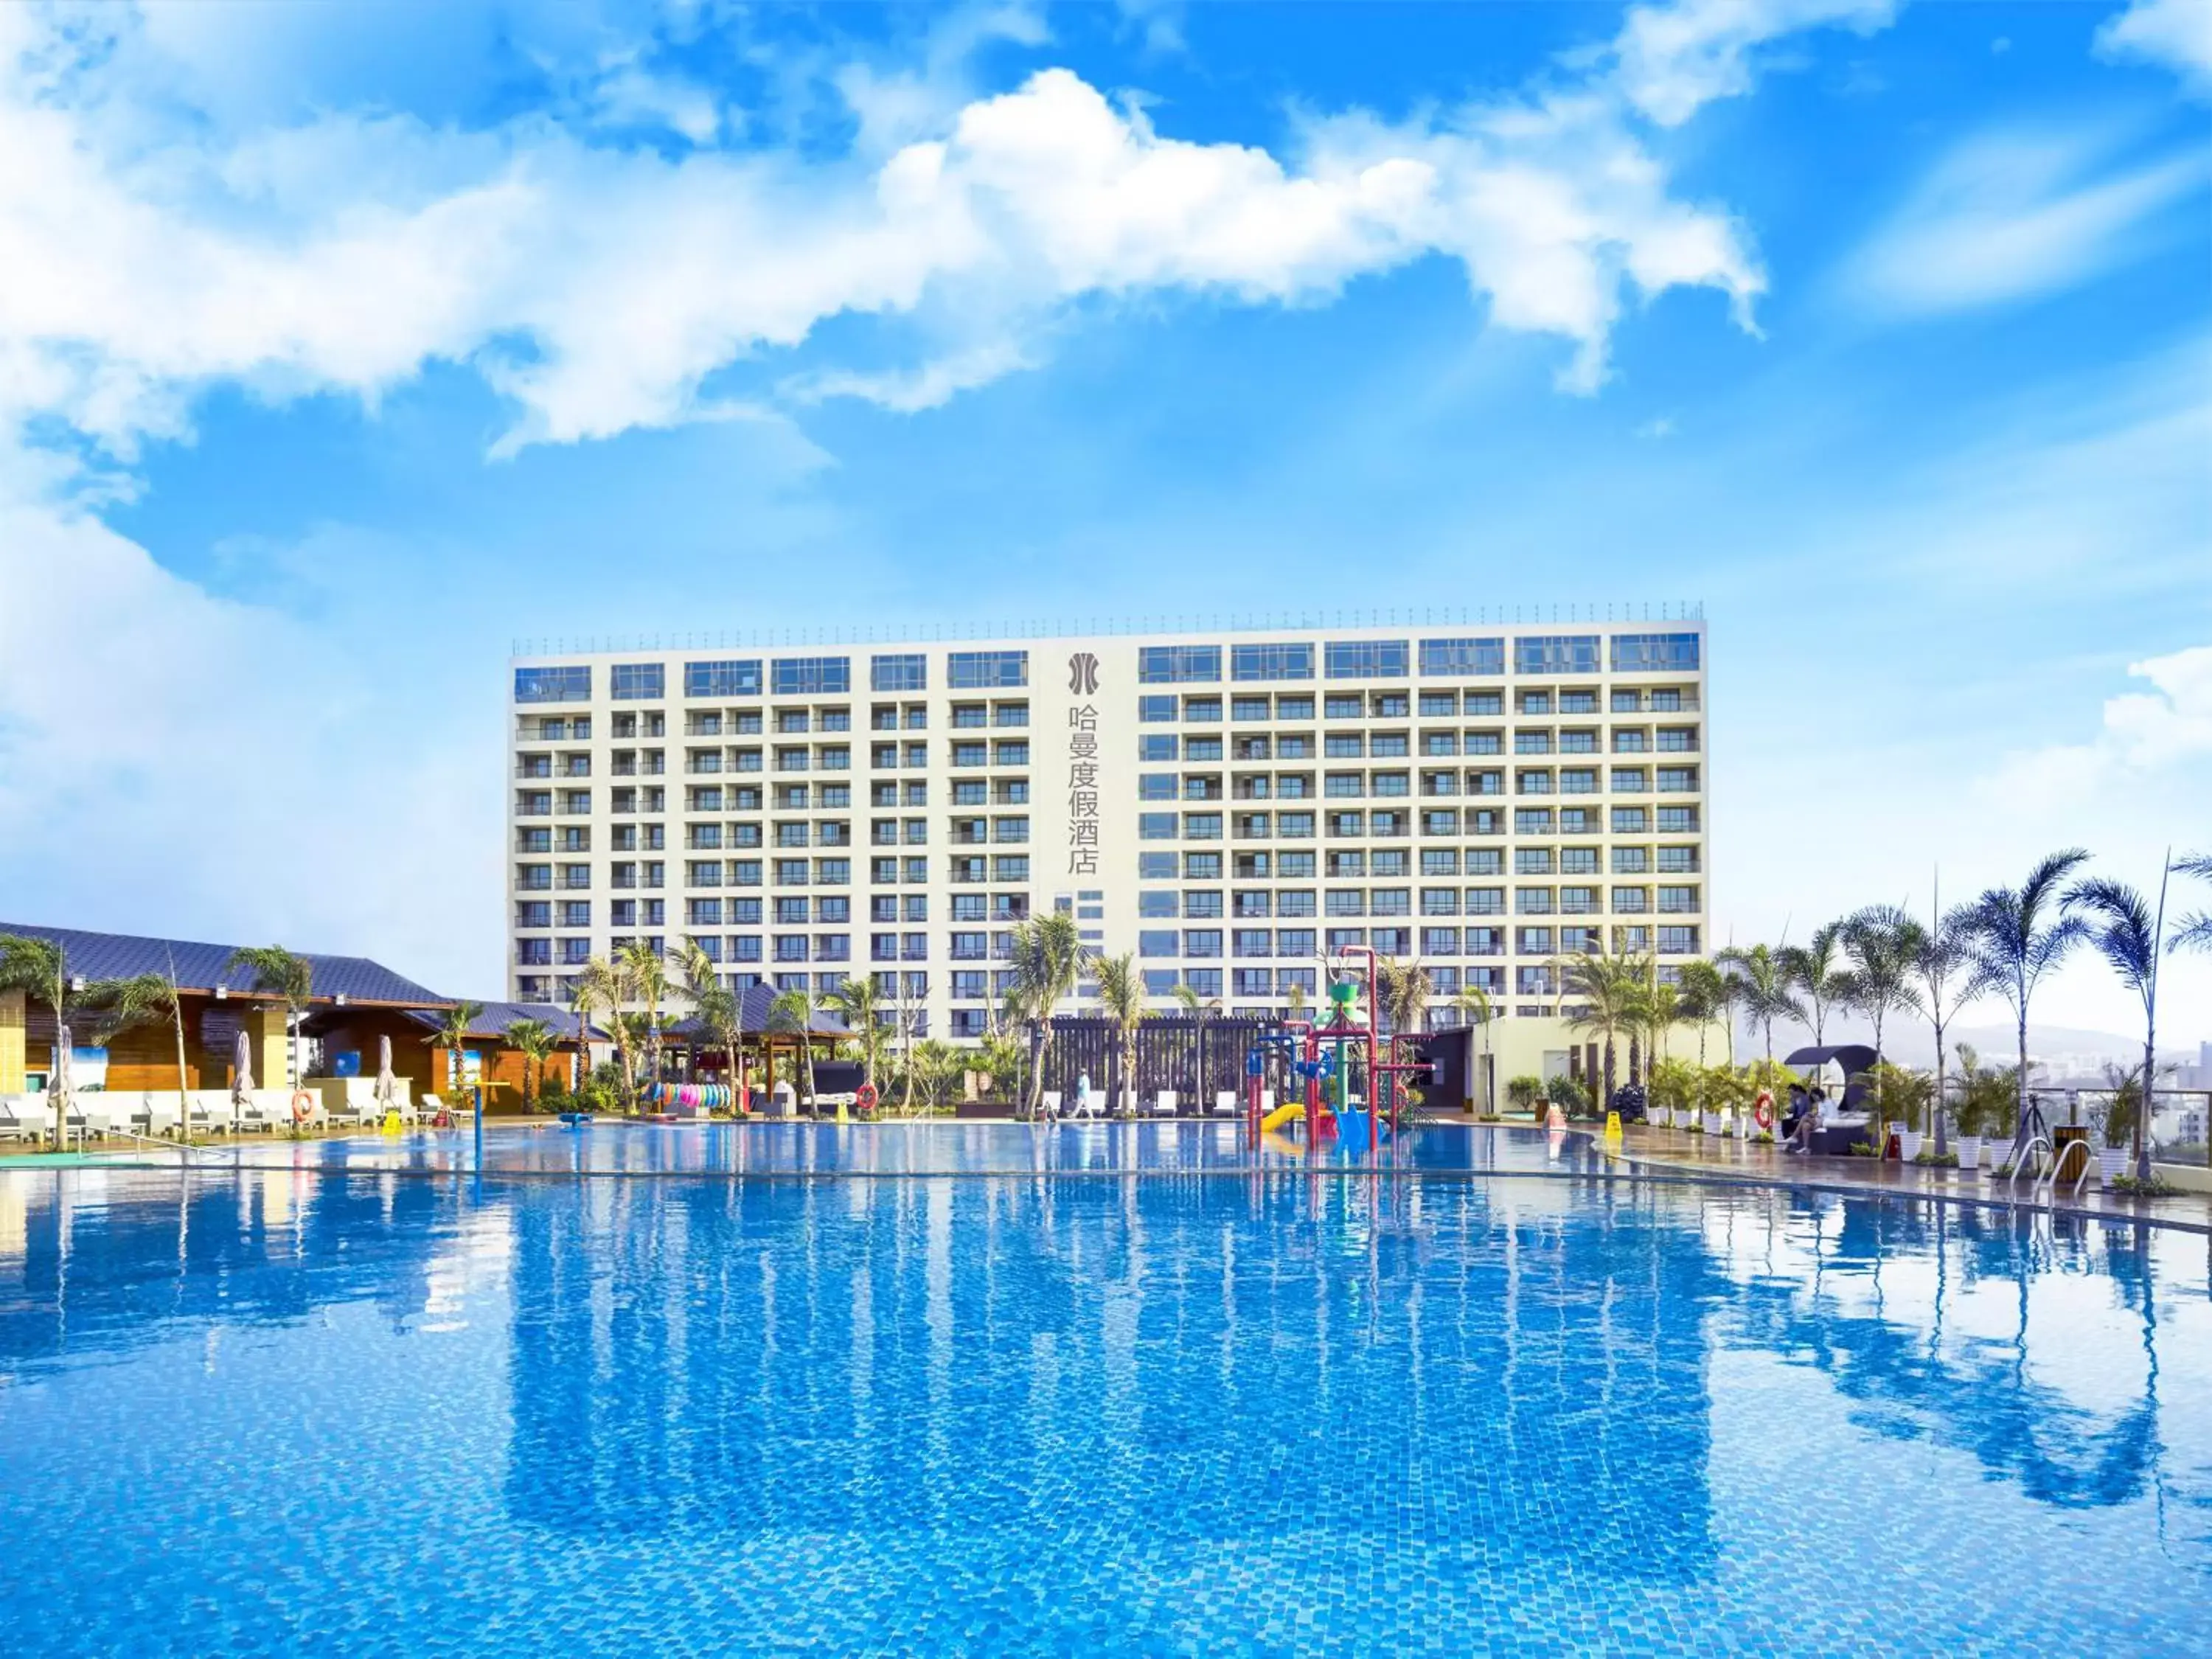 Swimming Pool in Harman Resort Hotel Sanya